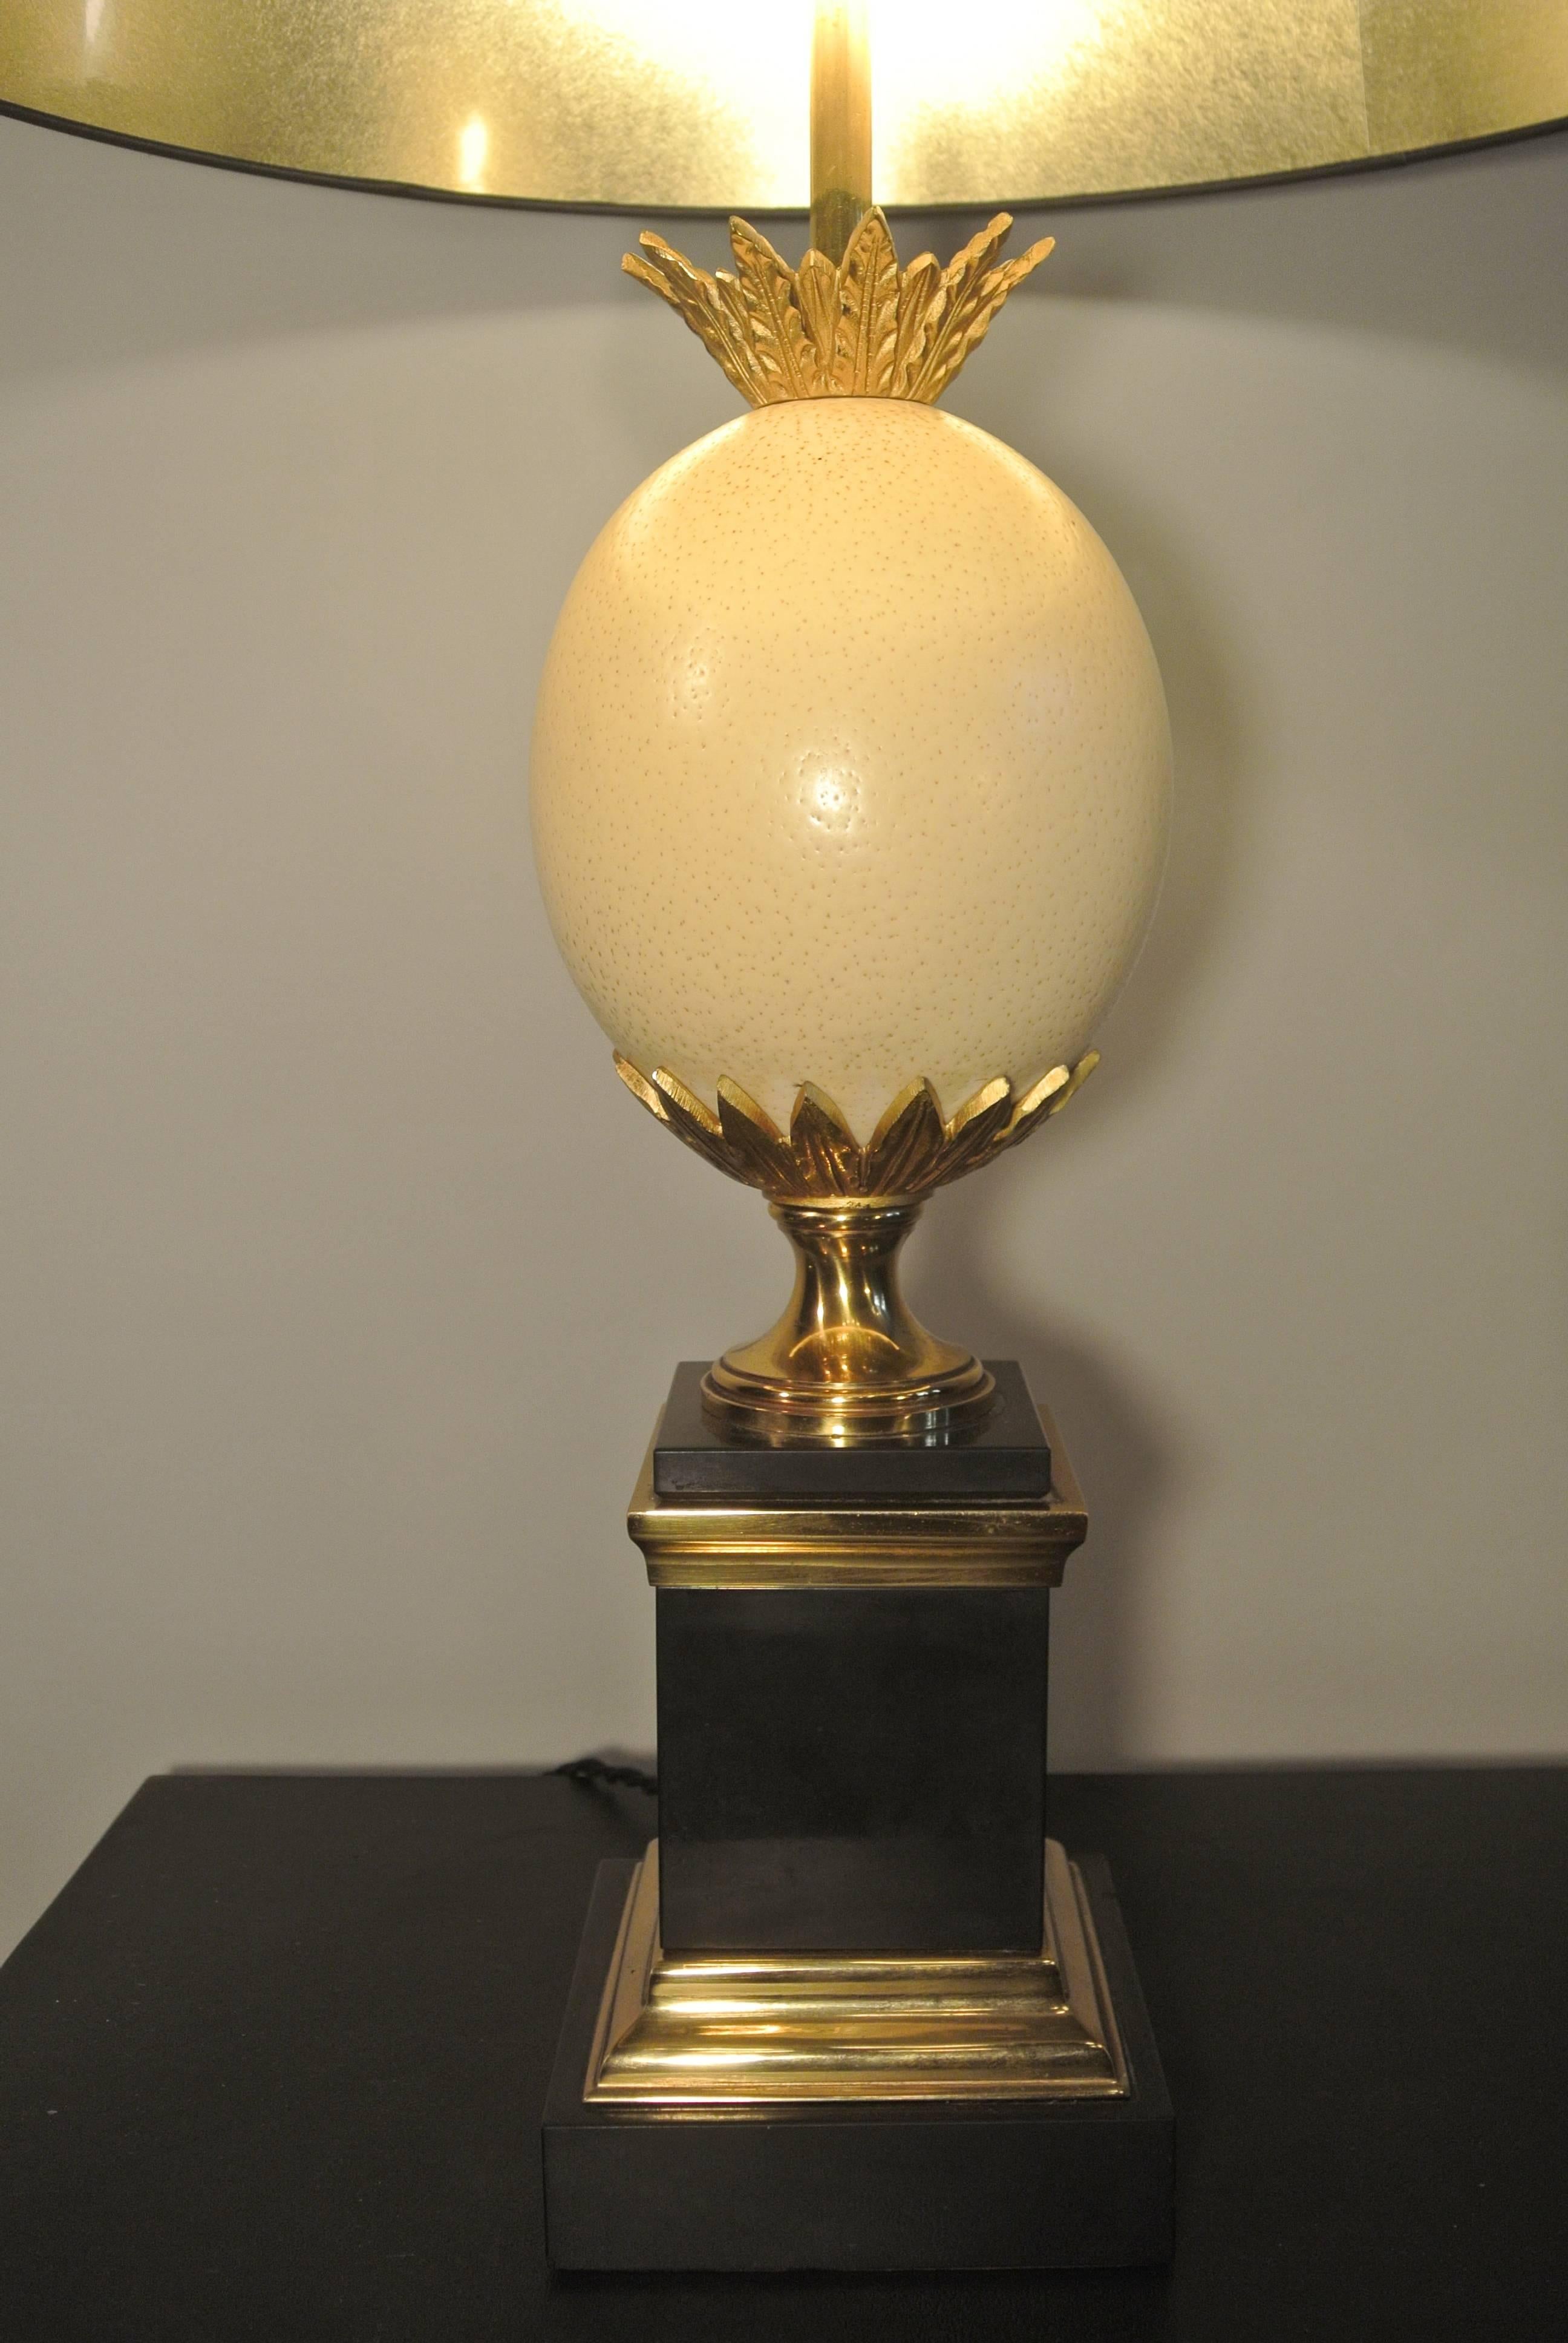 20th Century Beautiful 'Austrian Egg' Lamp from Maison Charles